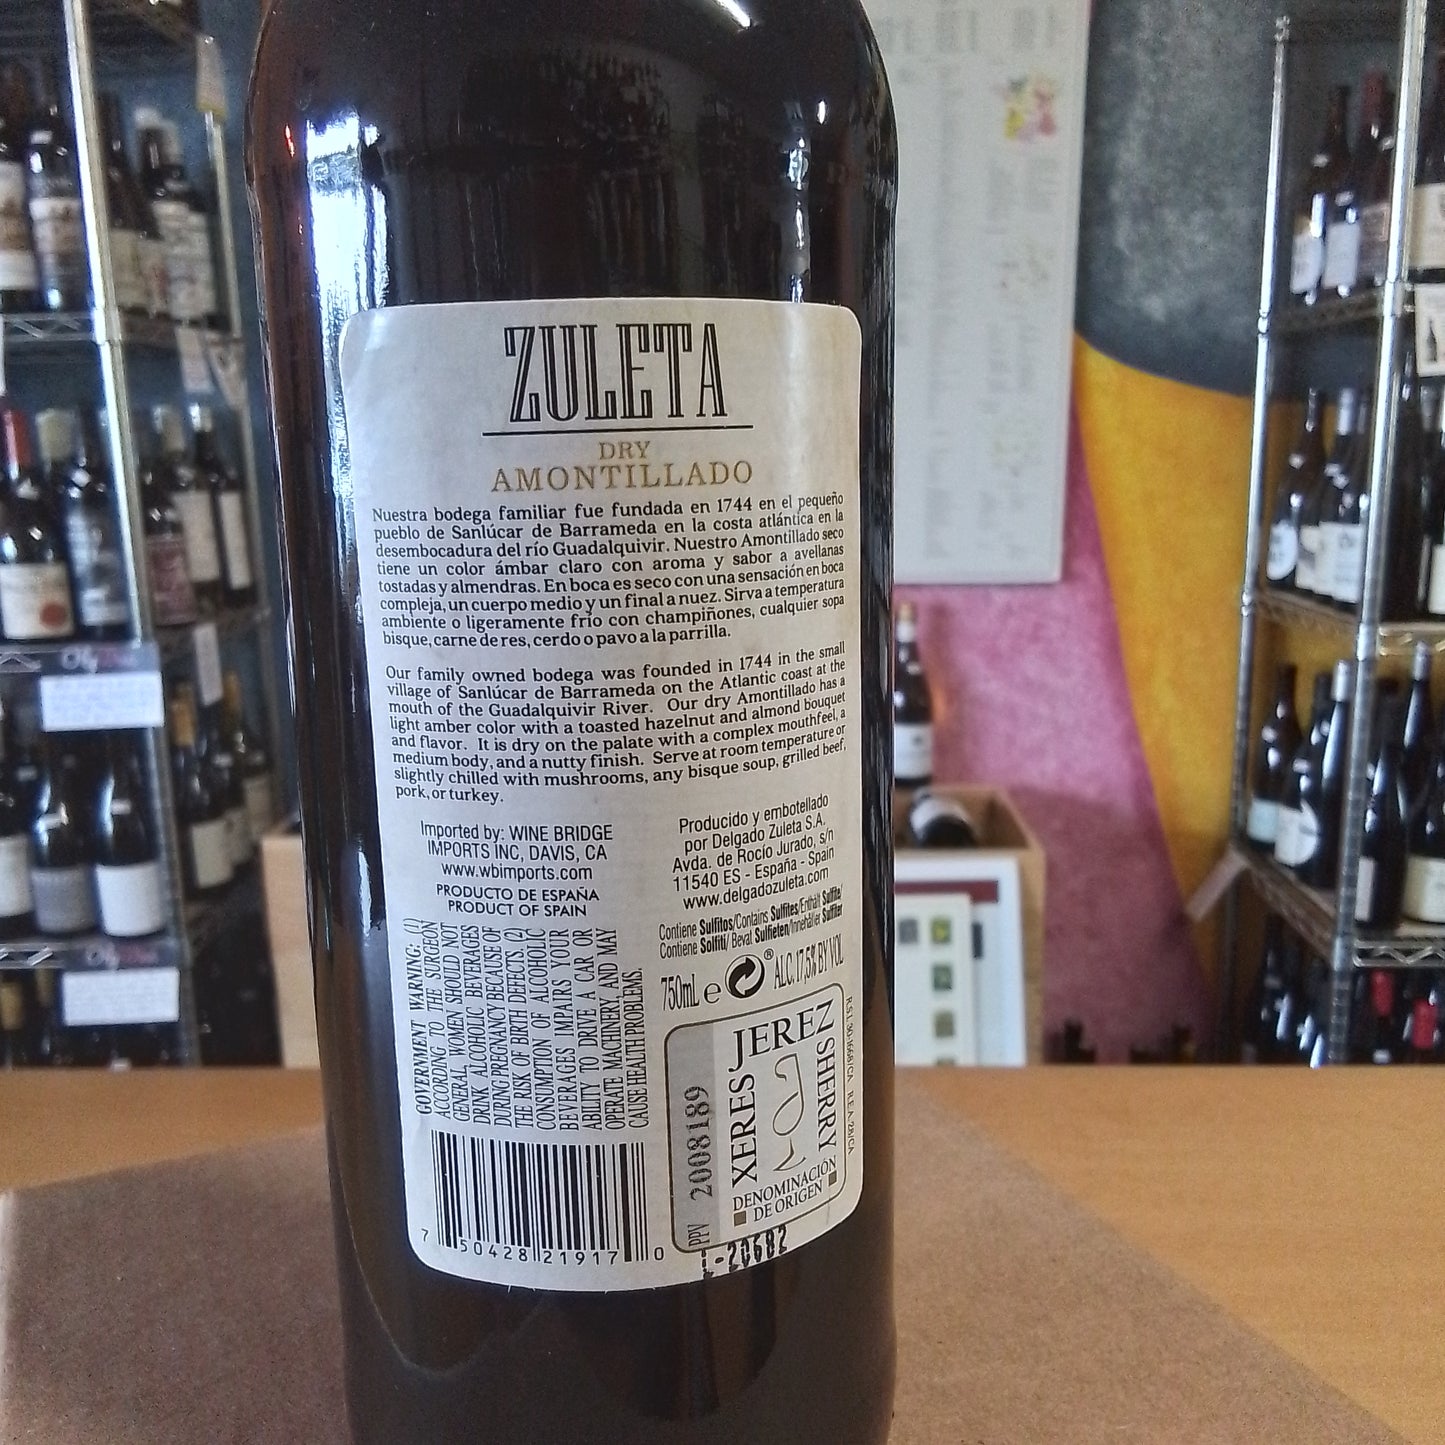 BODEGA DELGADO ZULETA Dry Amontillado Sherry (Jerez, Spain)